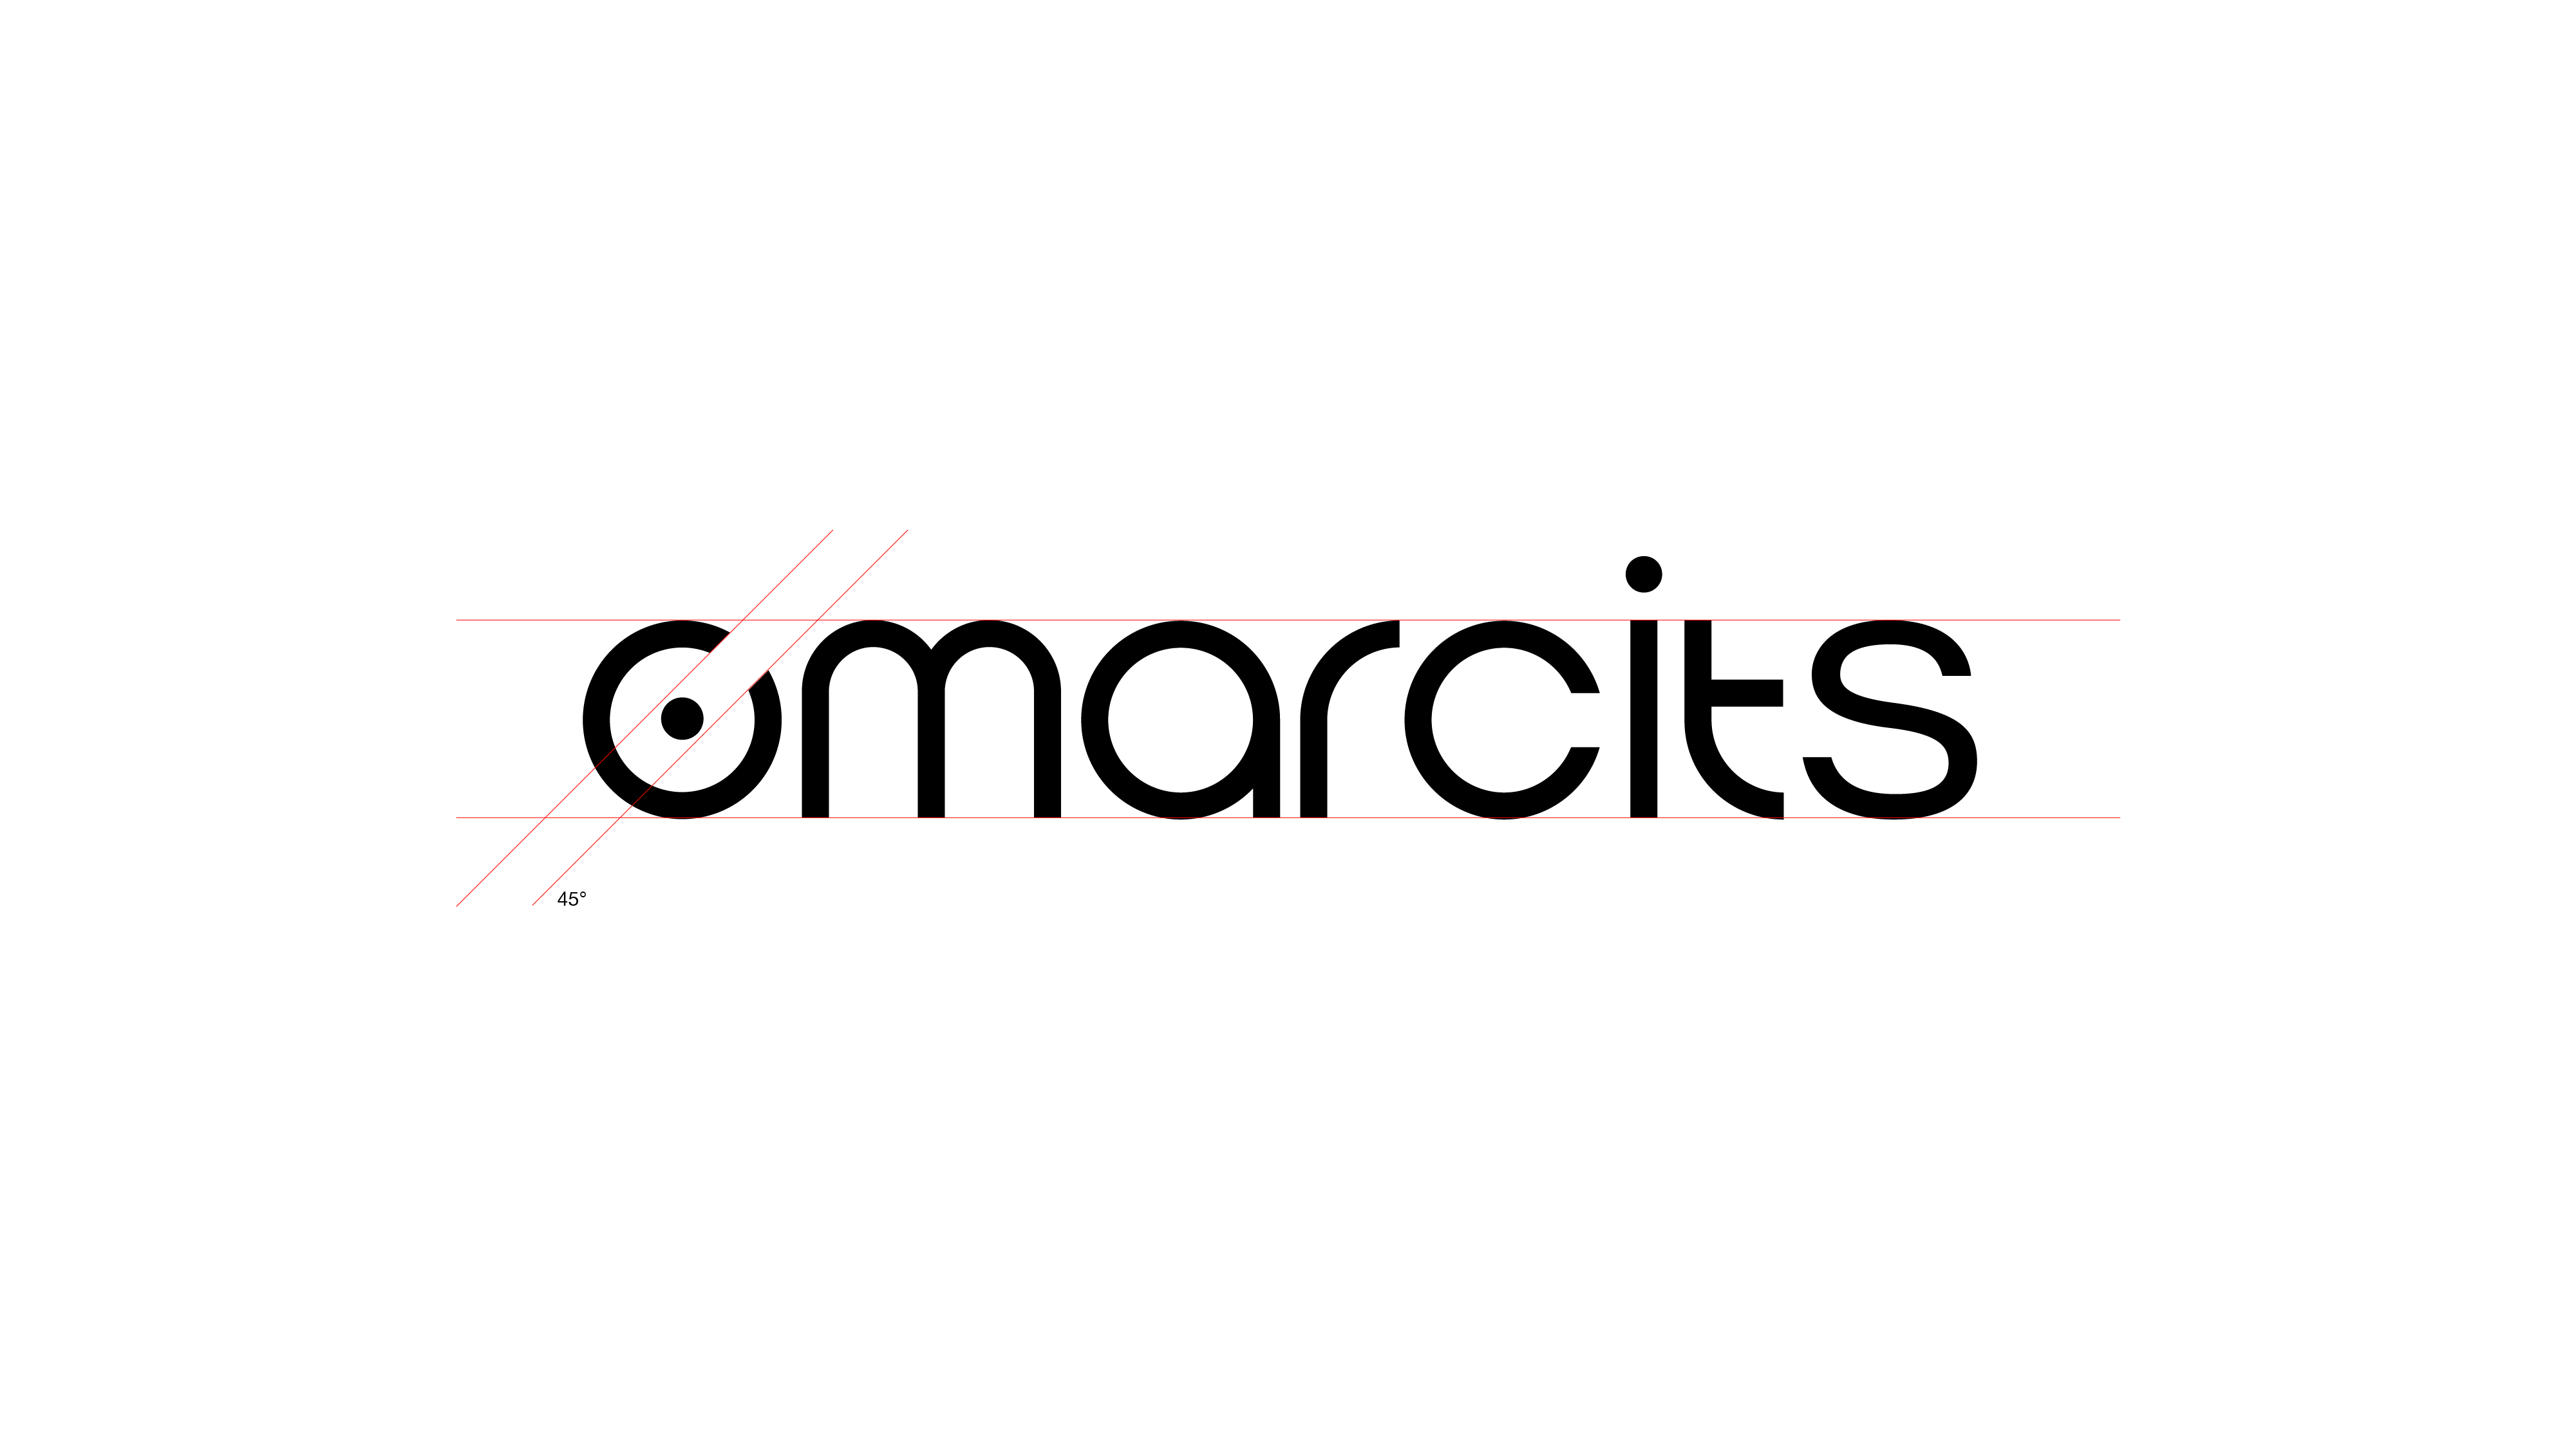 CMARCITS - New logo